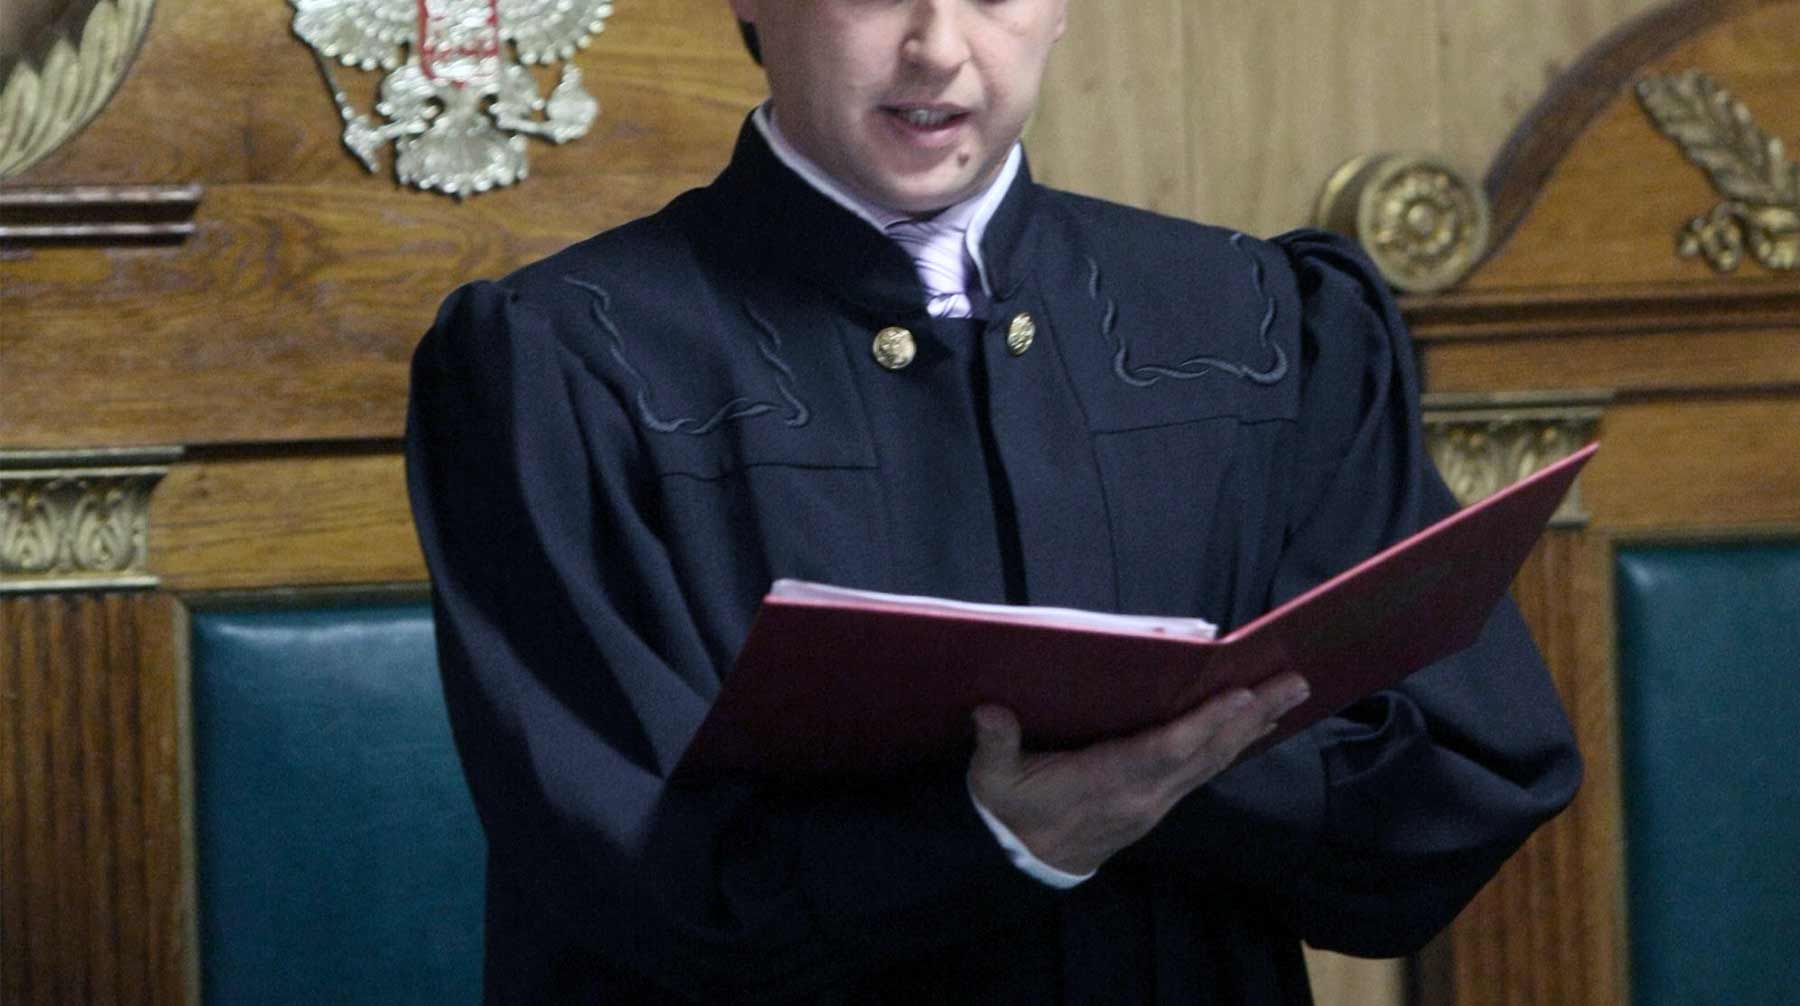 Денис Хисамов также лишен воинского звания капитана запаса undefined